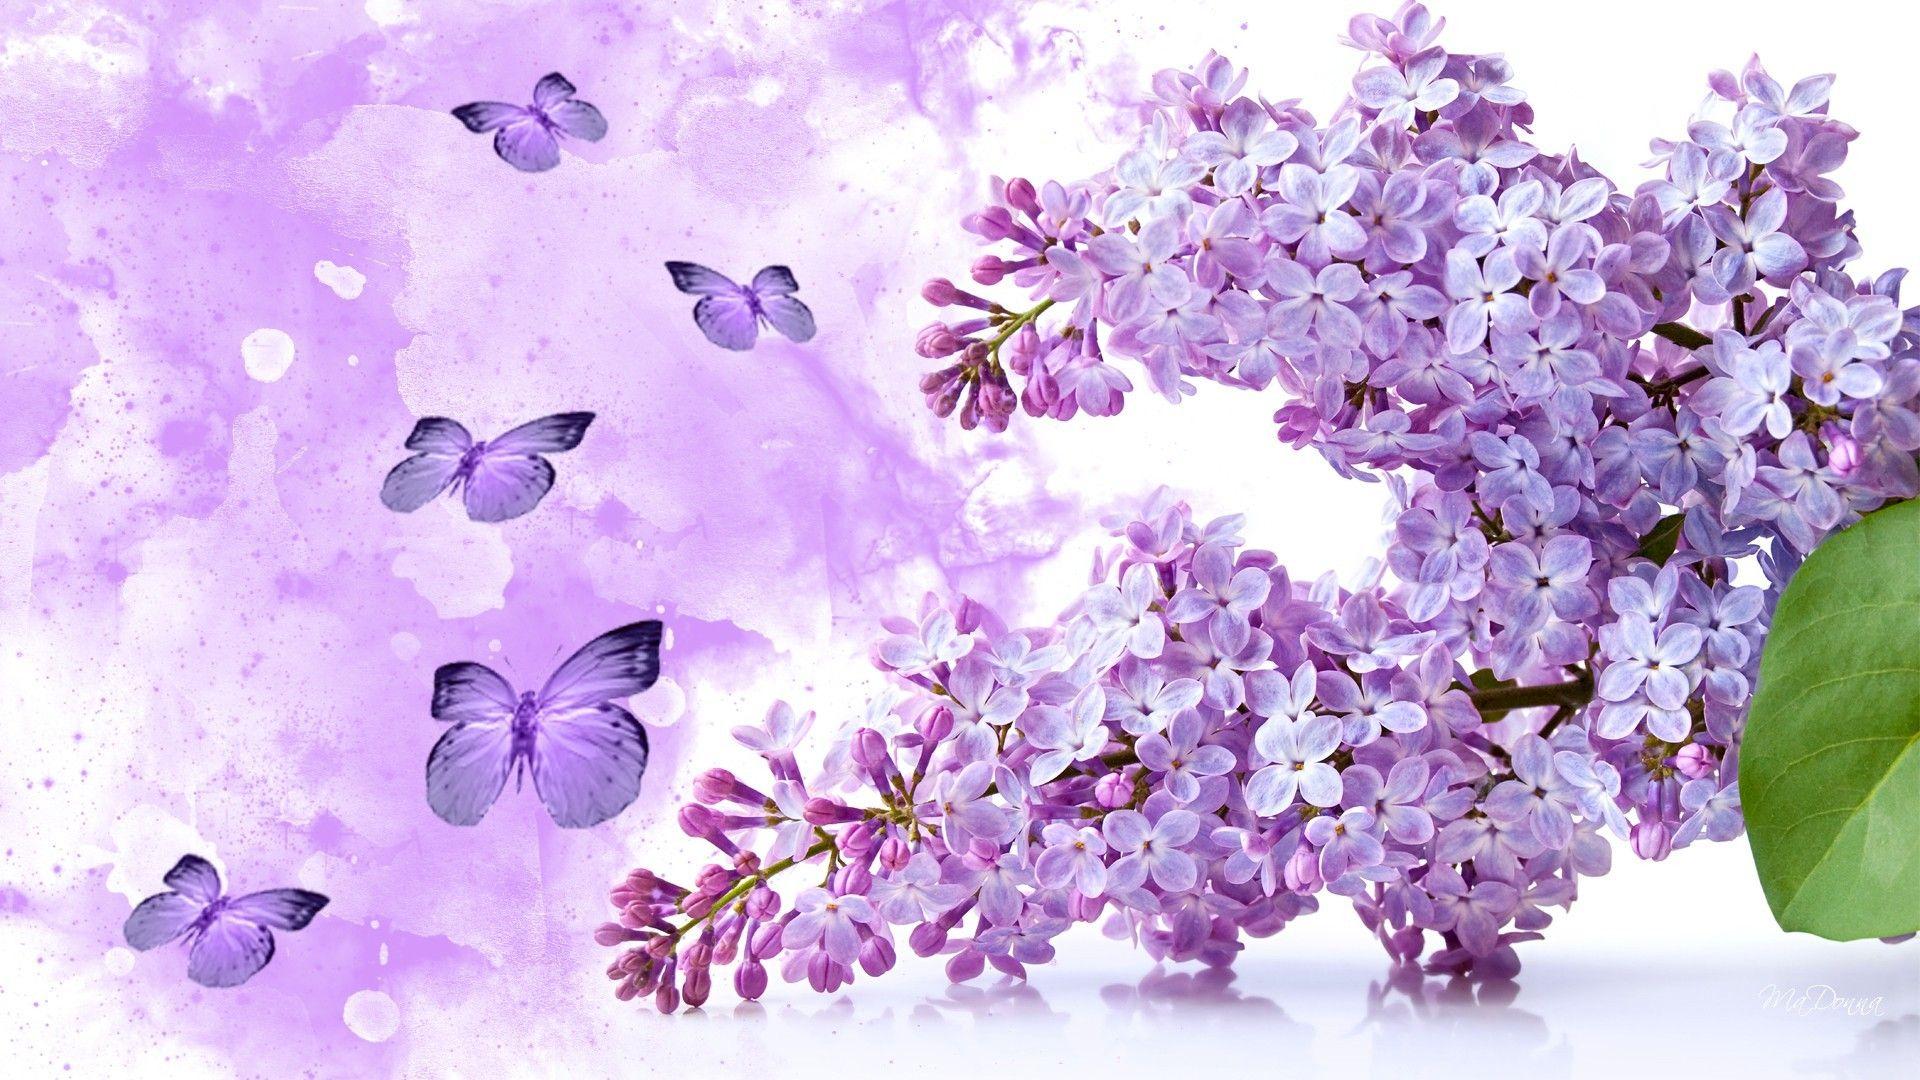 Color wallpaper: Flowering Flowers Orchids HD Flower Garden